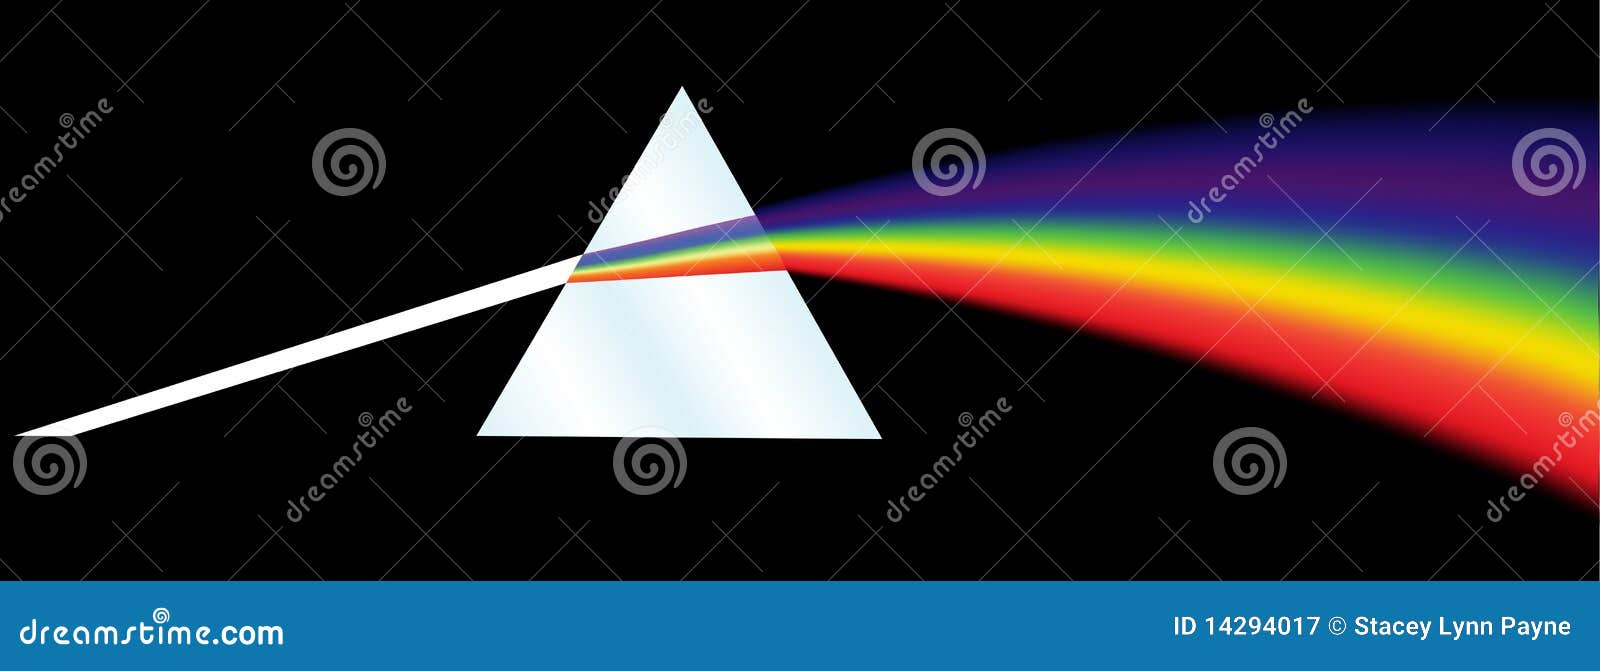 rainbow dispersion prism